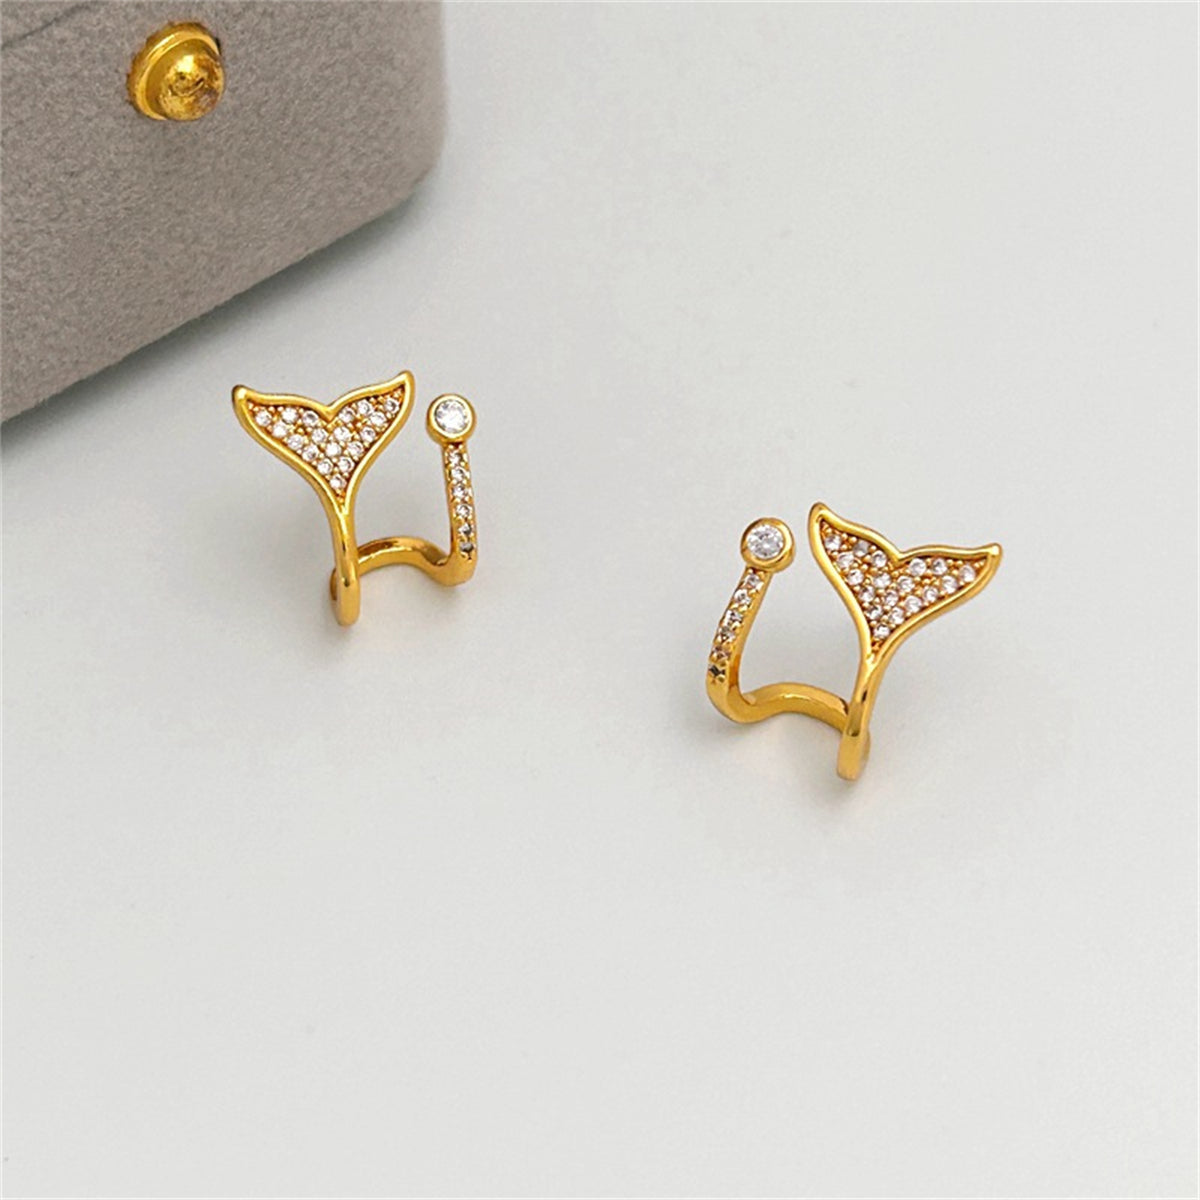 Cubic Zirconia & 18K Gold-Plated Fishtail Stud Earrings